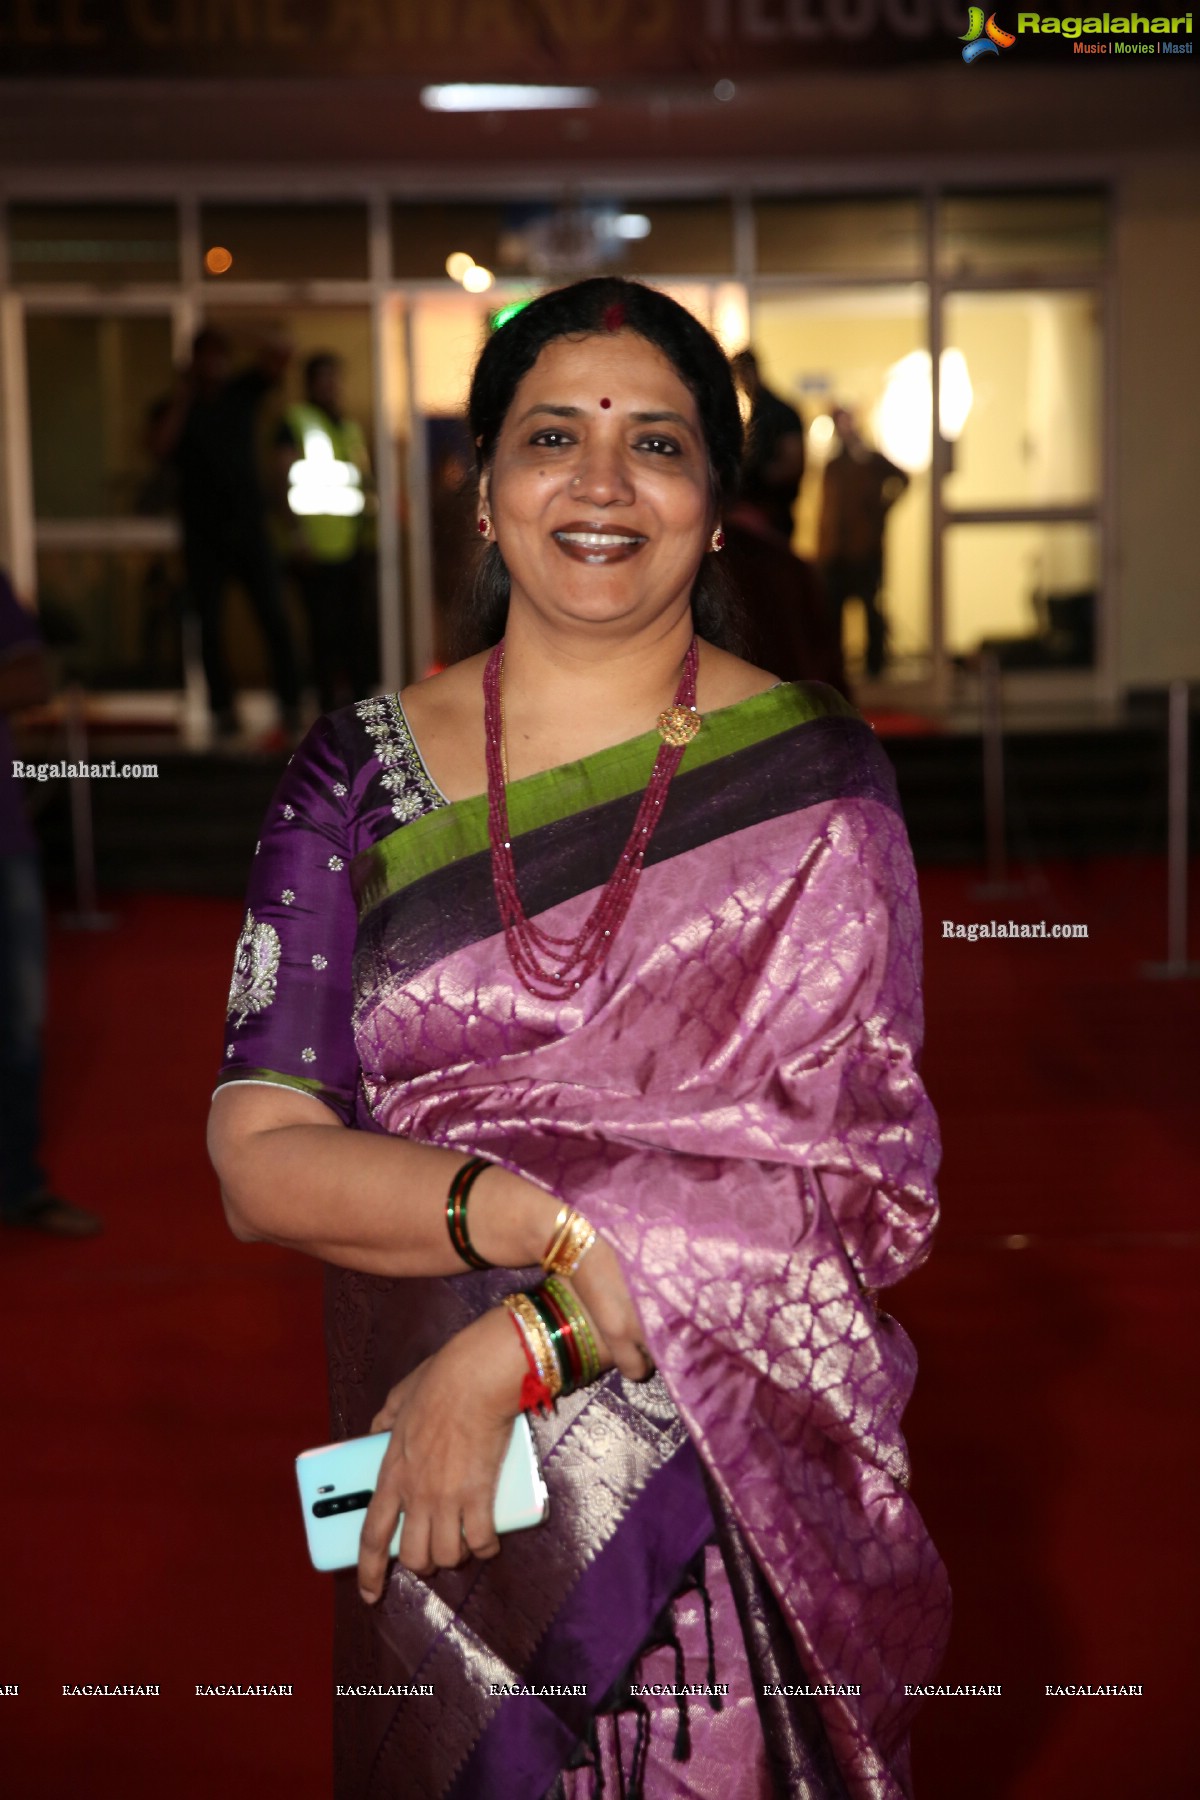 Zee Cine Awards Telugu 2020 at GMC Balayogi Indoor Stadium, Hyderabad